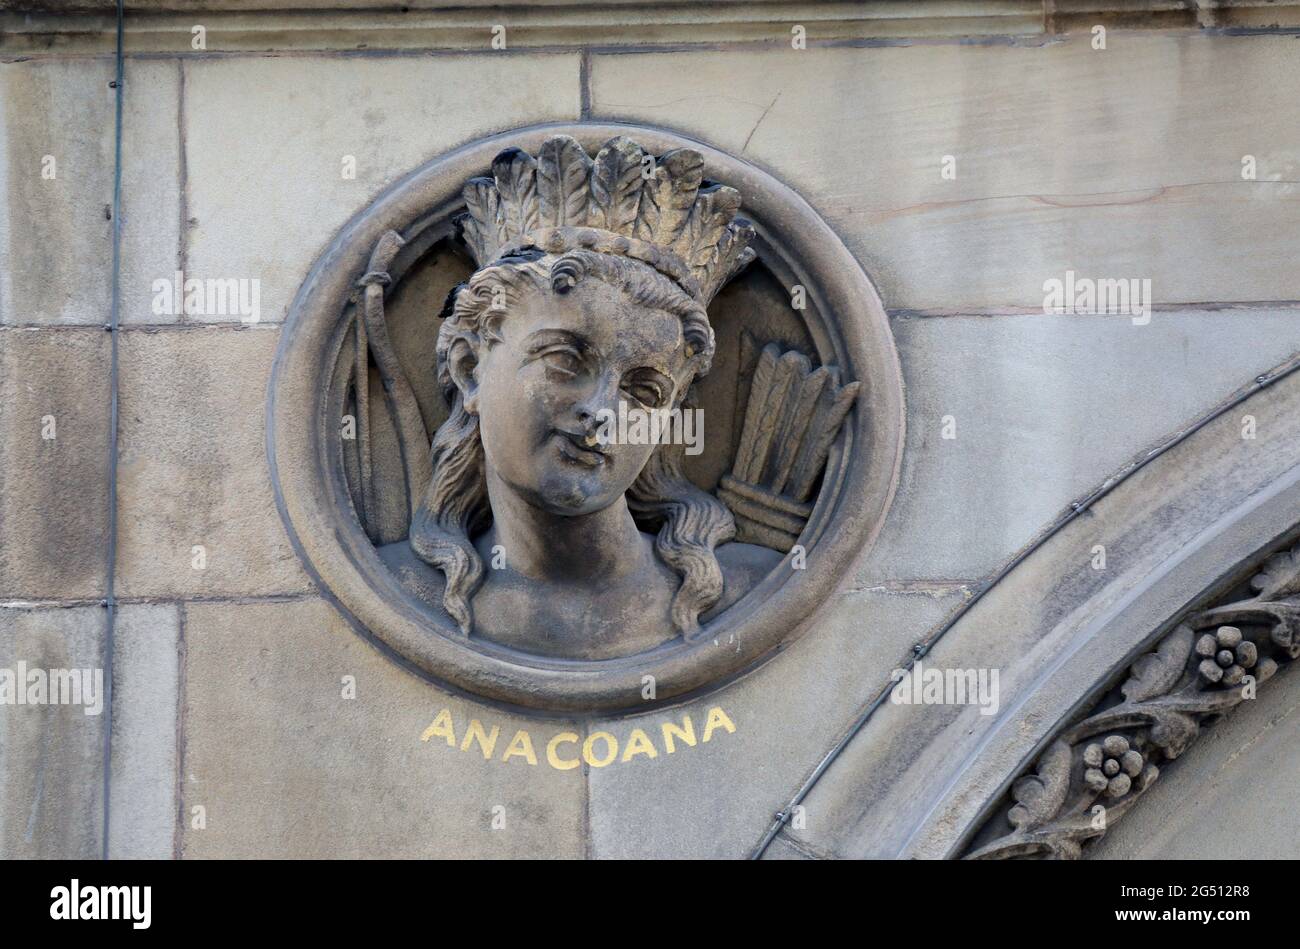 La reine Anacoana de Cuba à l'édifice Hargreaves de Liverpool Banque D'Images